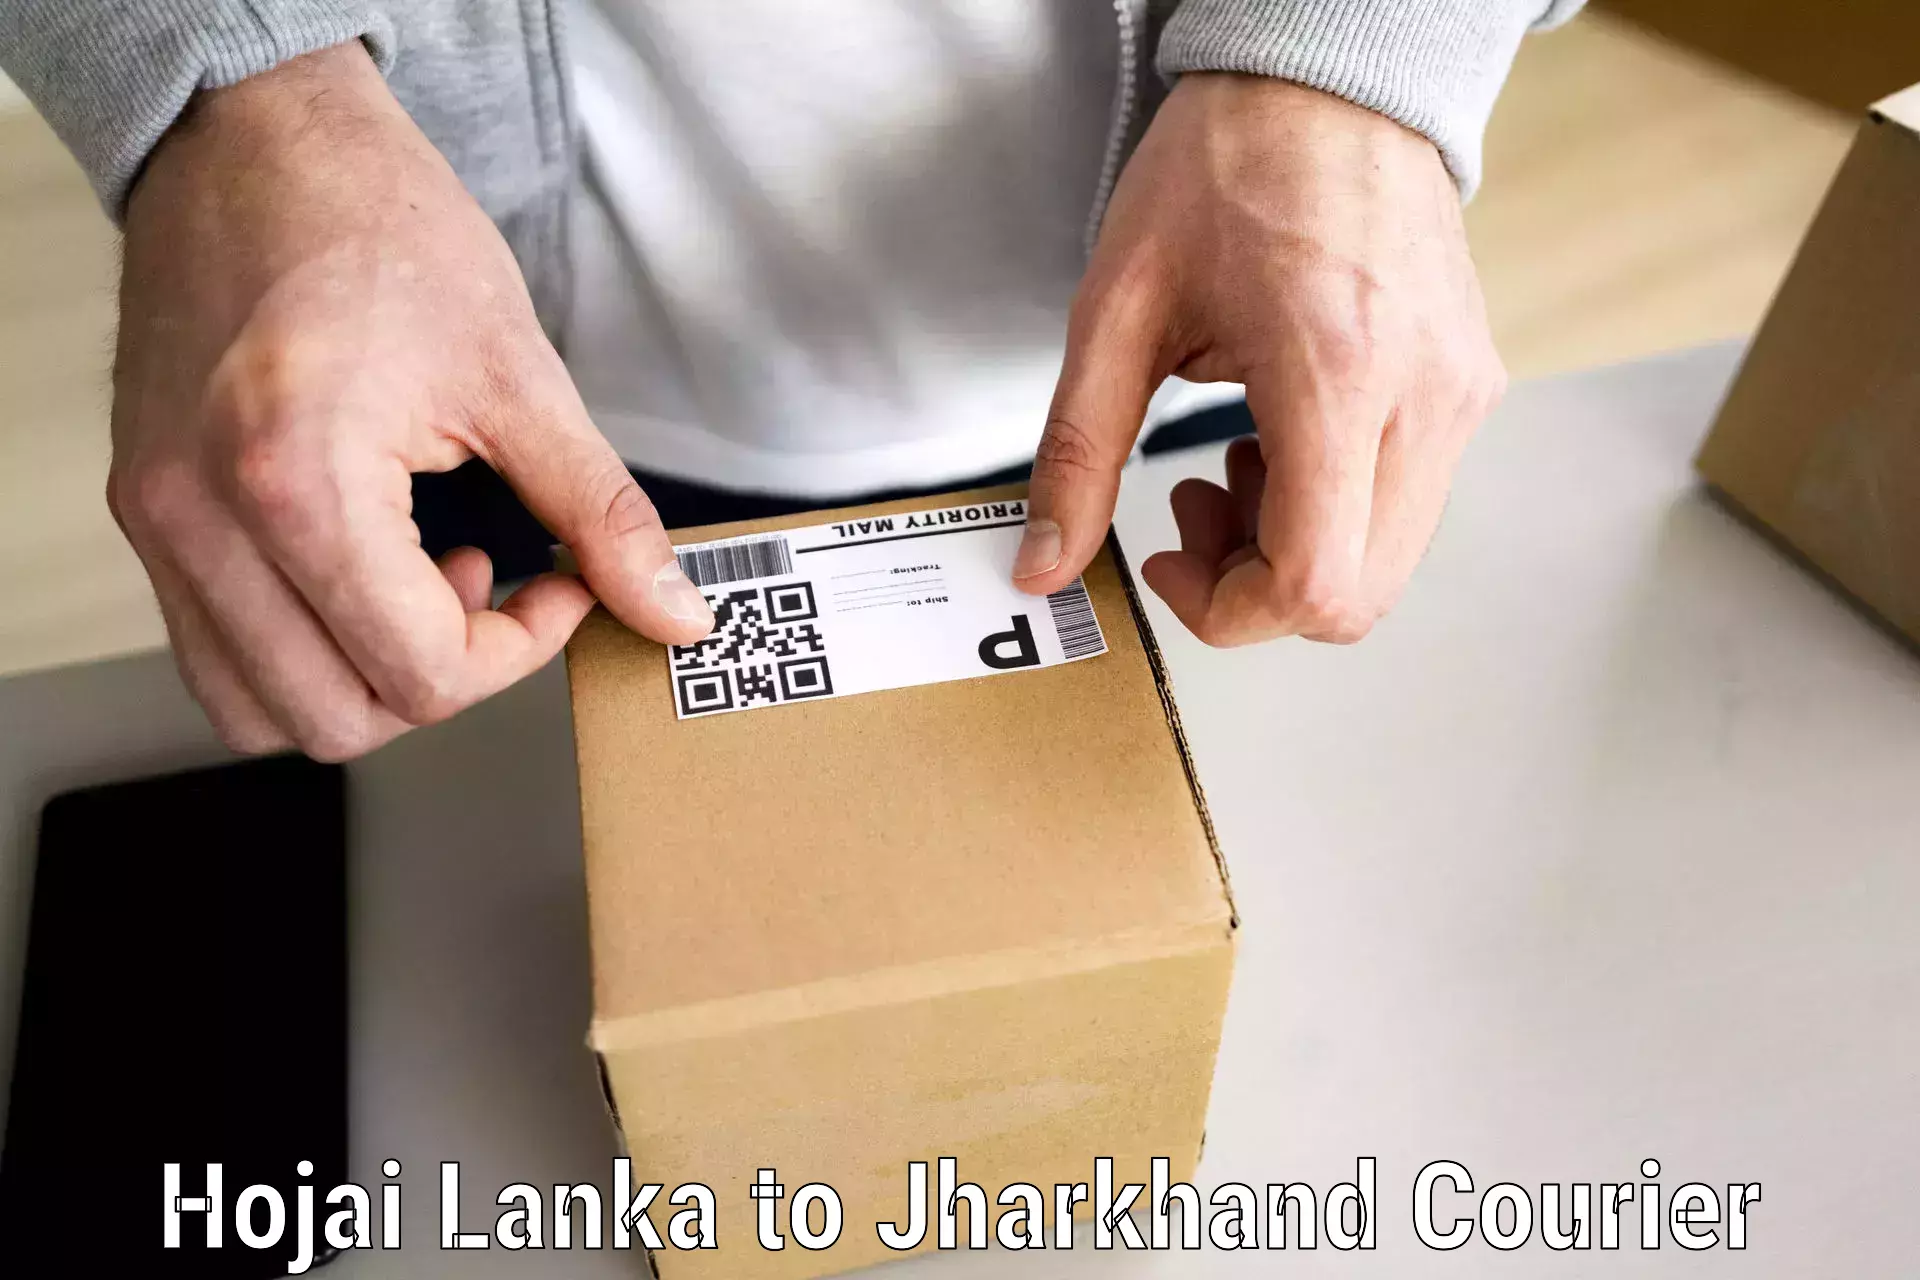 Household moving companies Hojai Lanka to Chatra